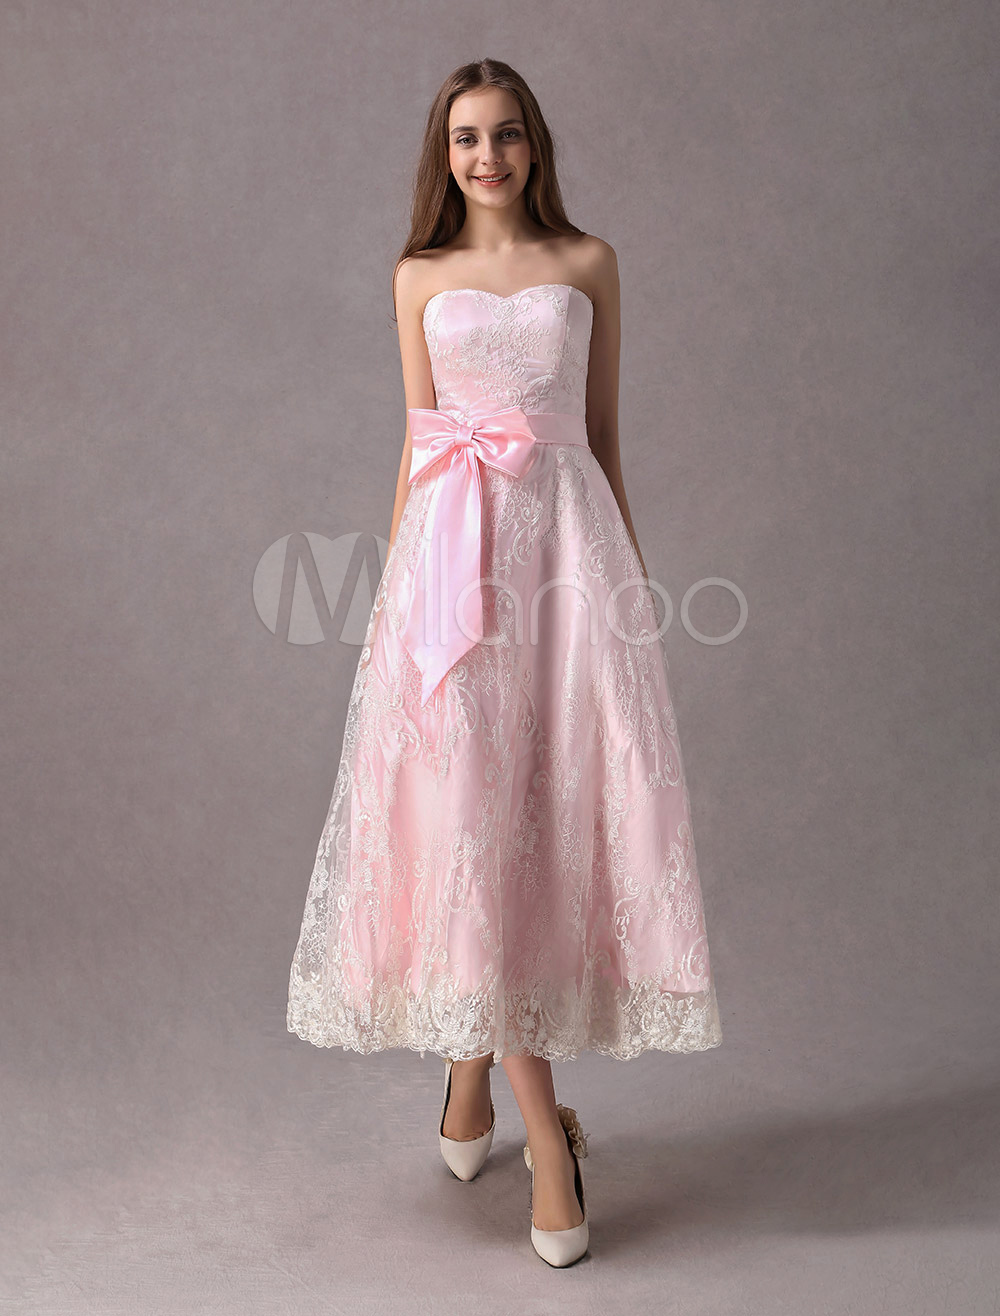 tea dress pink